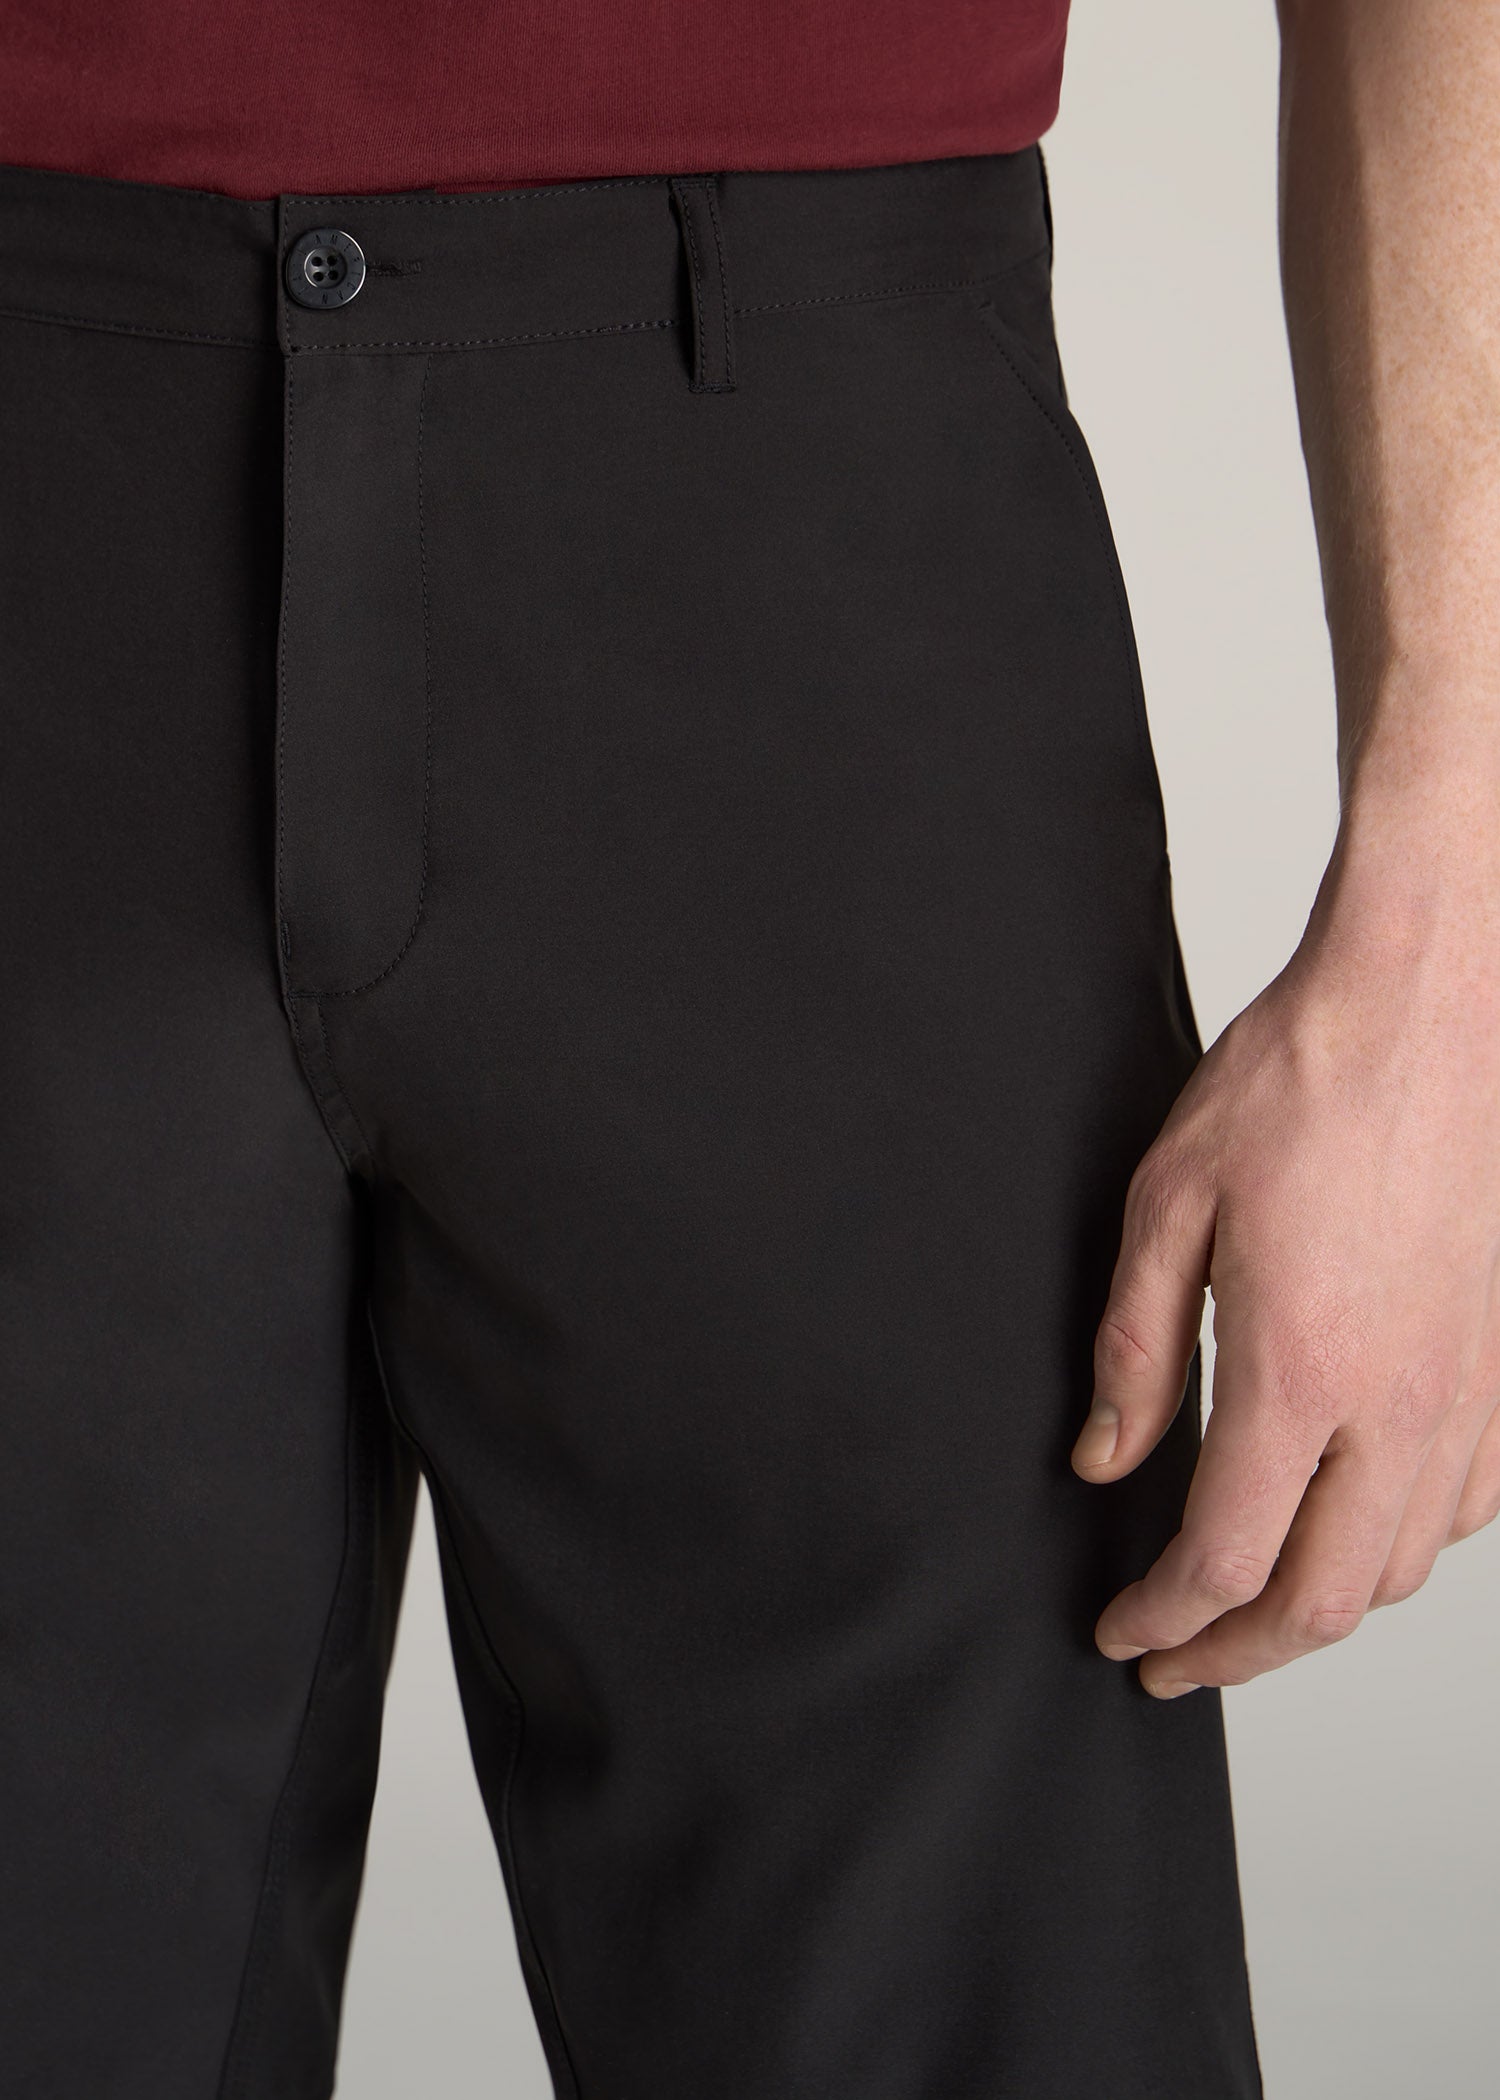    American-Tall-Men-Hybrid-Shorts-Shorts-Black-detail